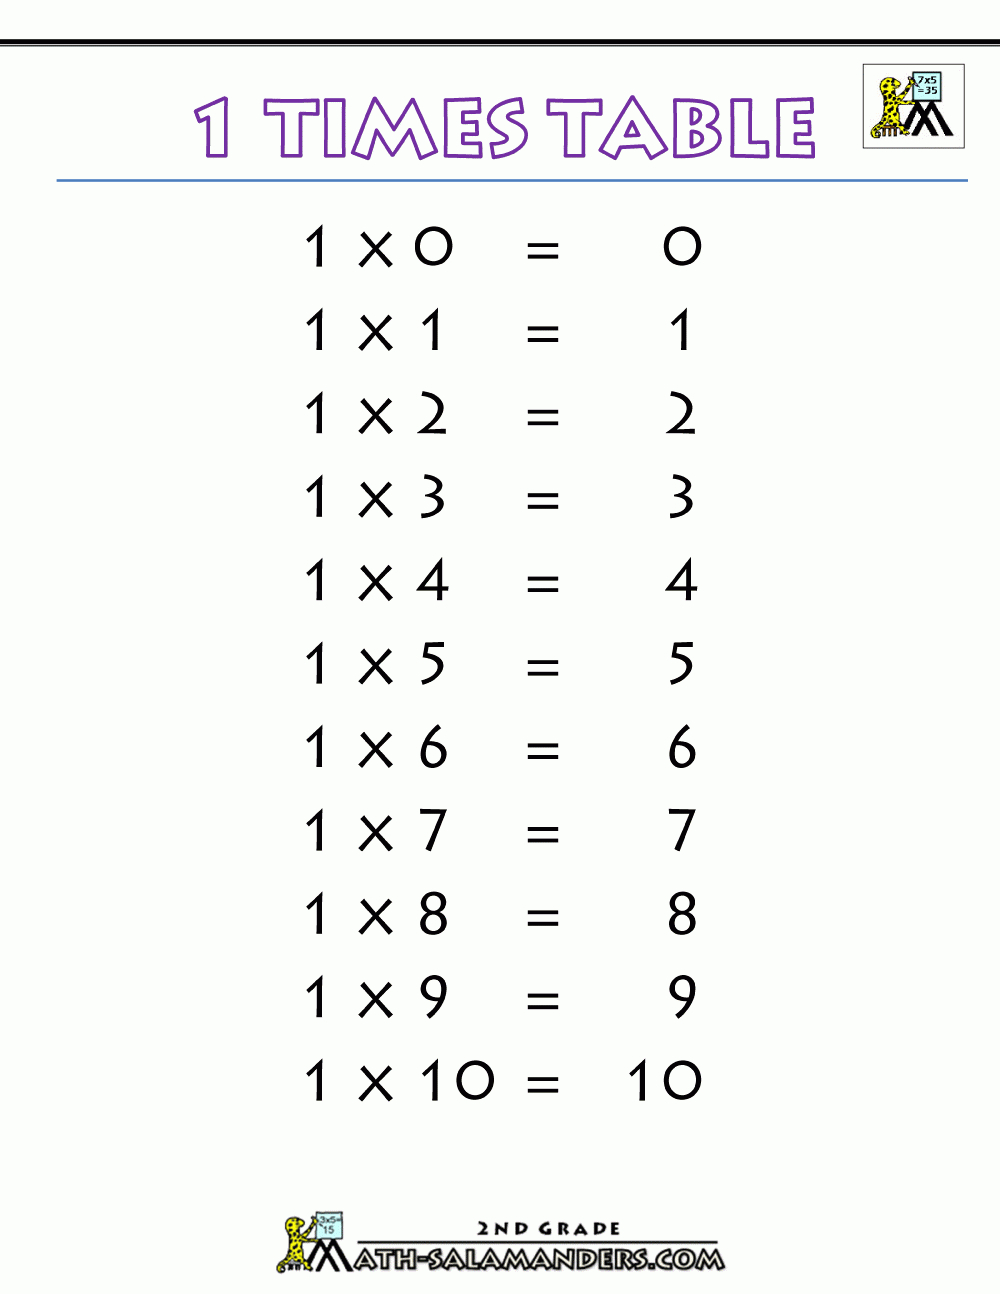 multiplication-table-test-1-12-times-tables-worksheets-multiplication